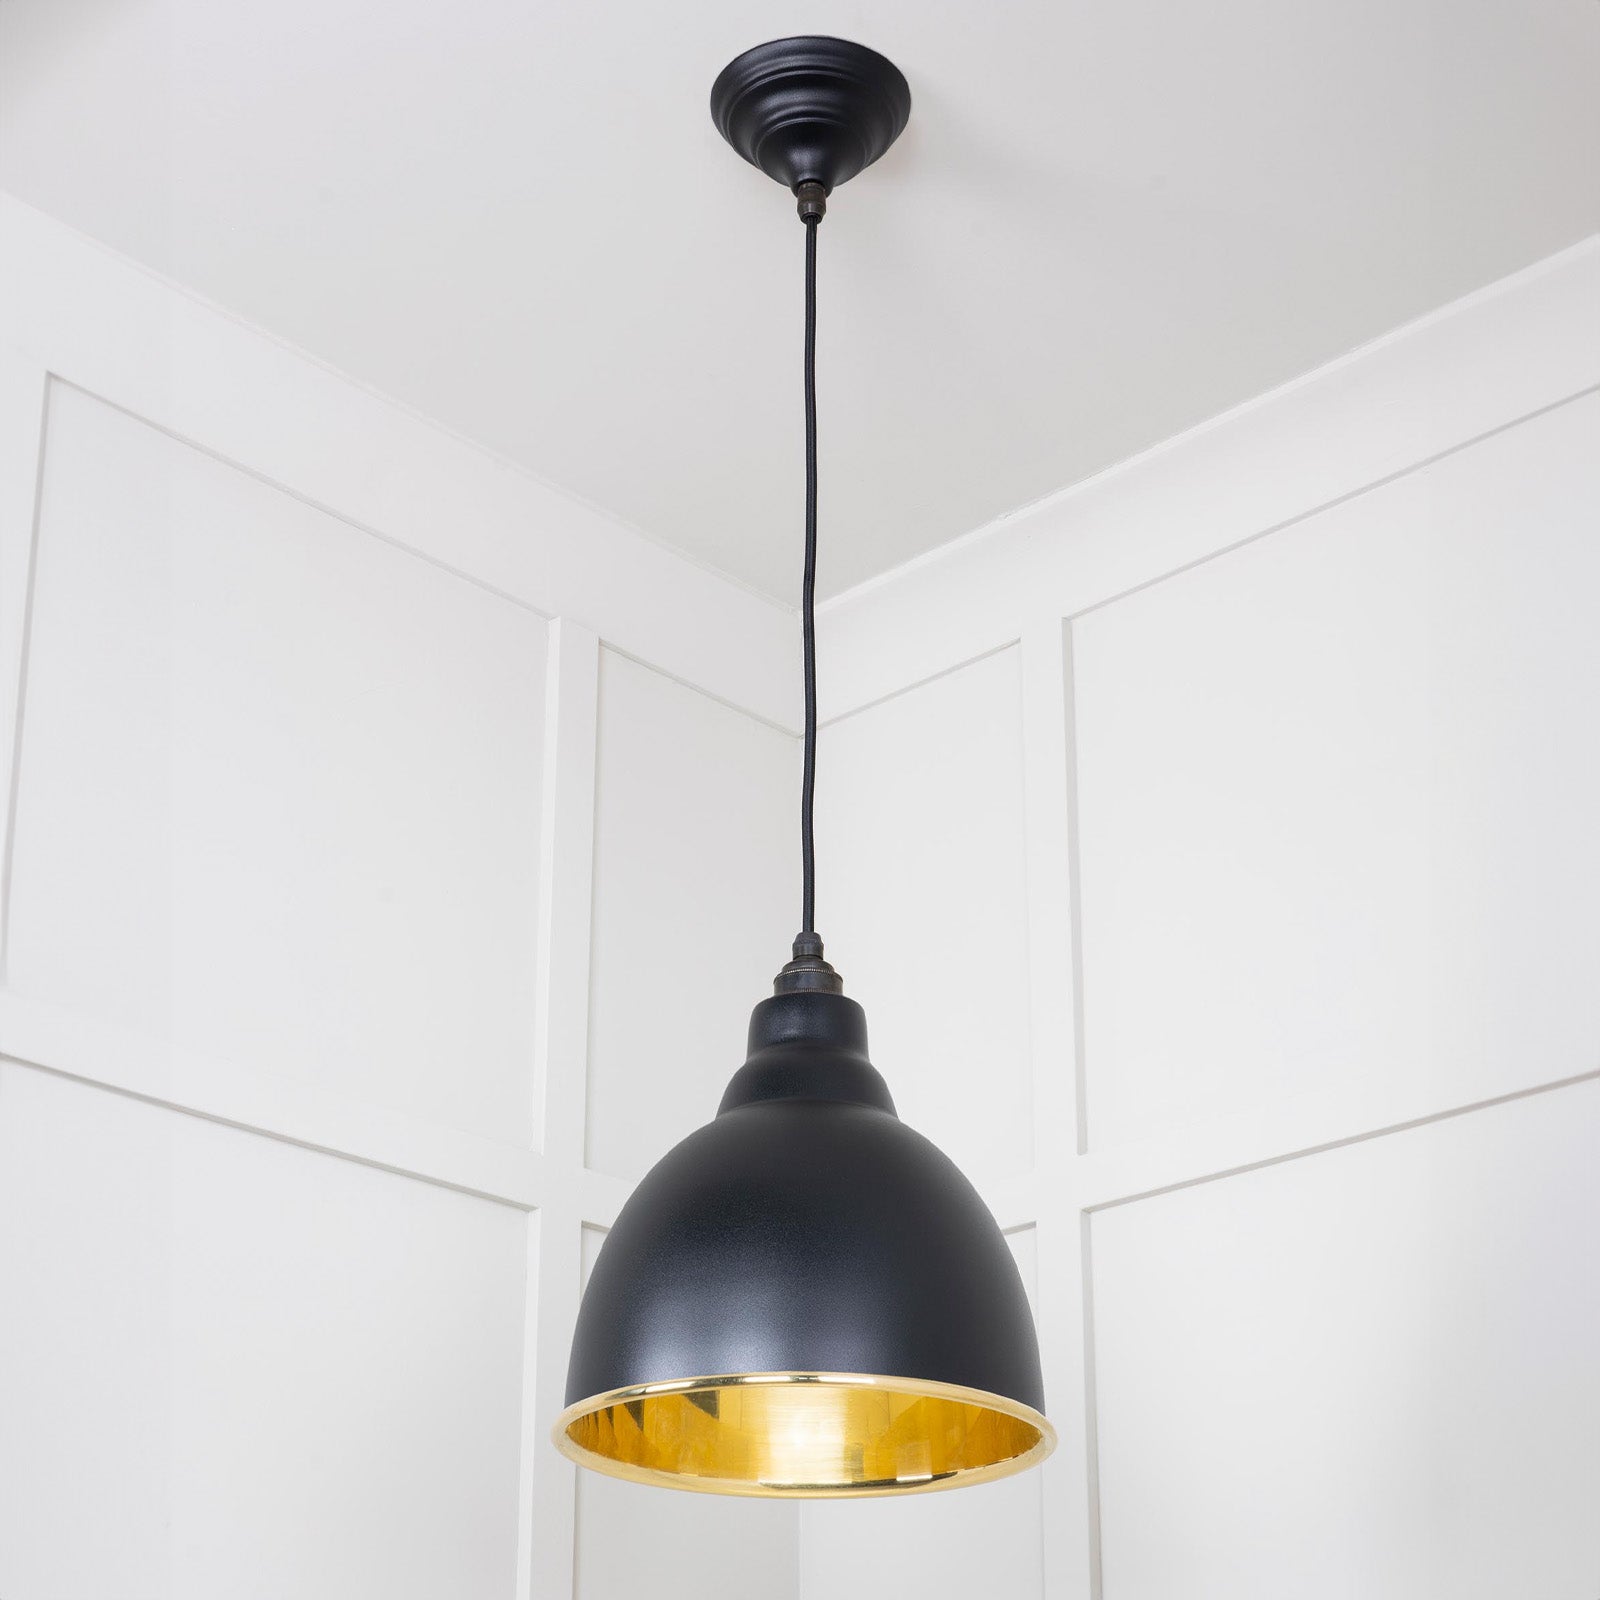 SHOW Full Image of Hanging Brindley Ceiling Light in Elan Black